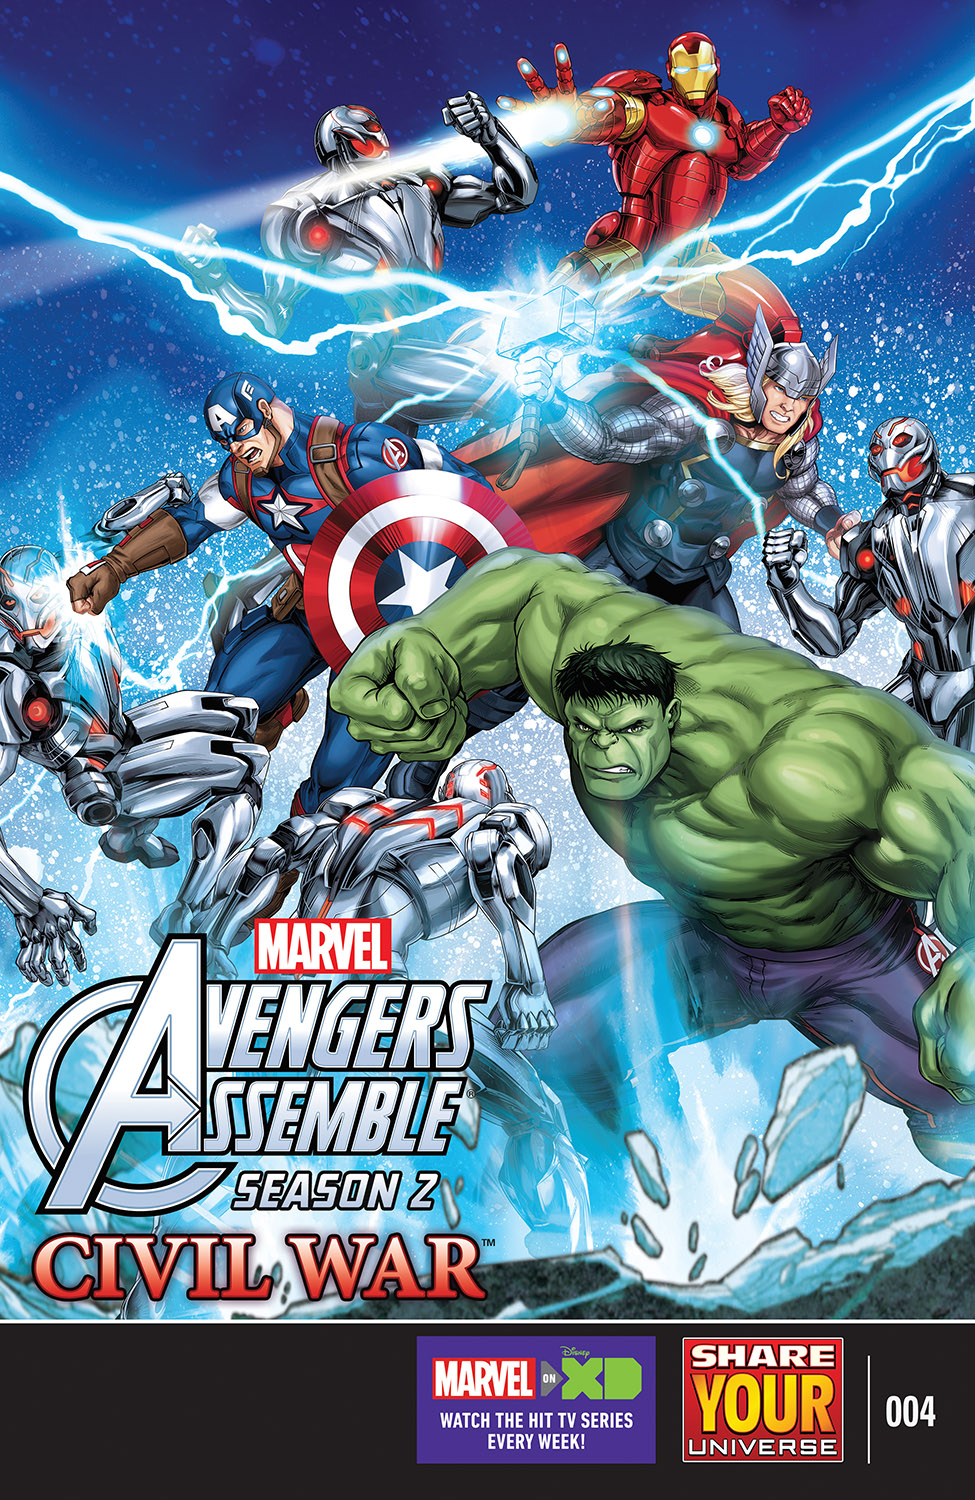 Marvel Universe Avengers Assemble: Civil War (2016) #4